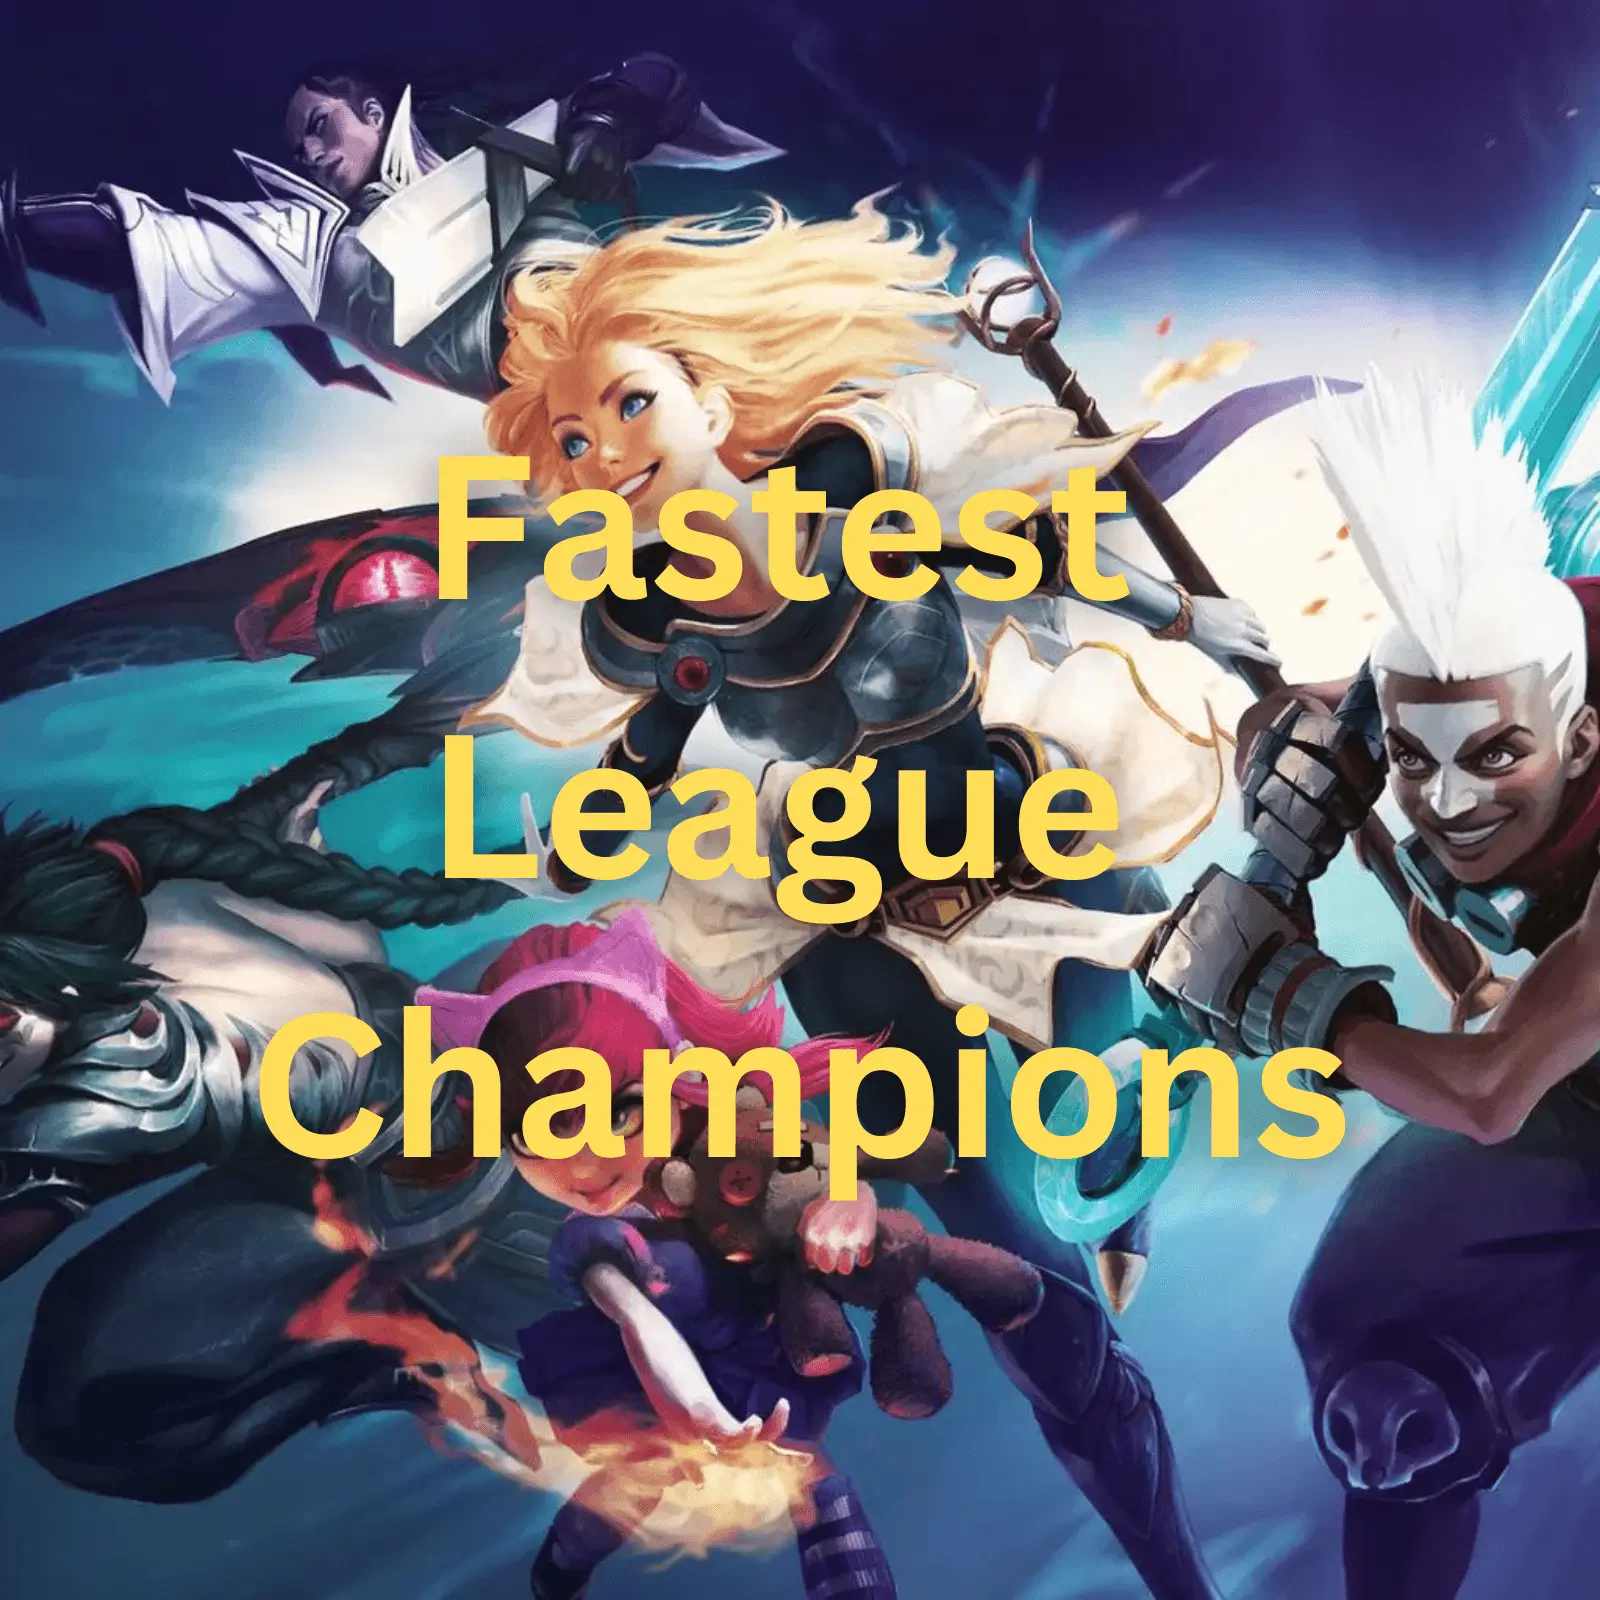 Fastest-League-Champions